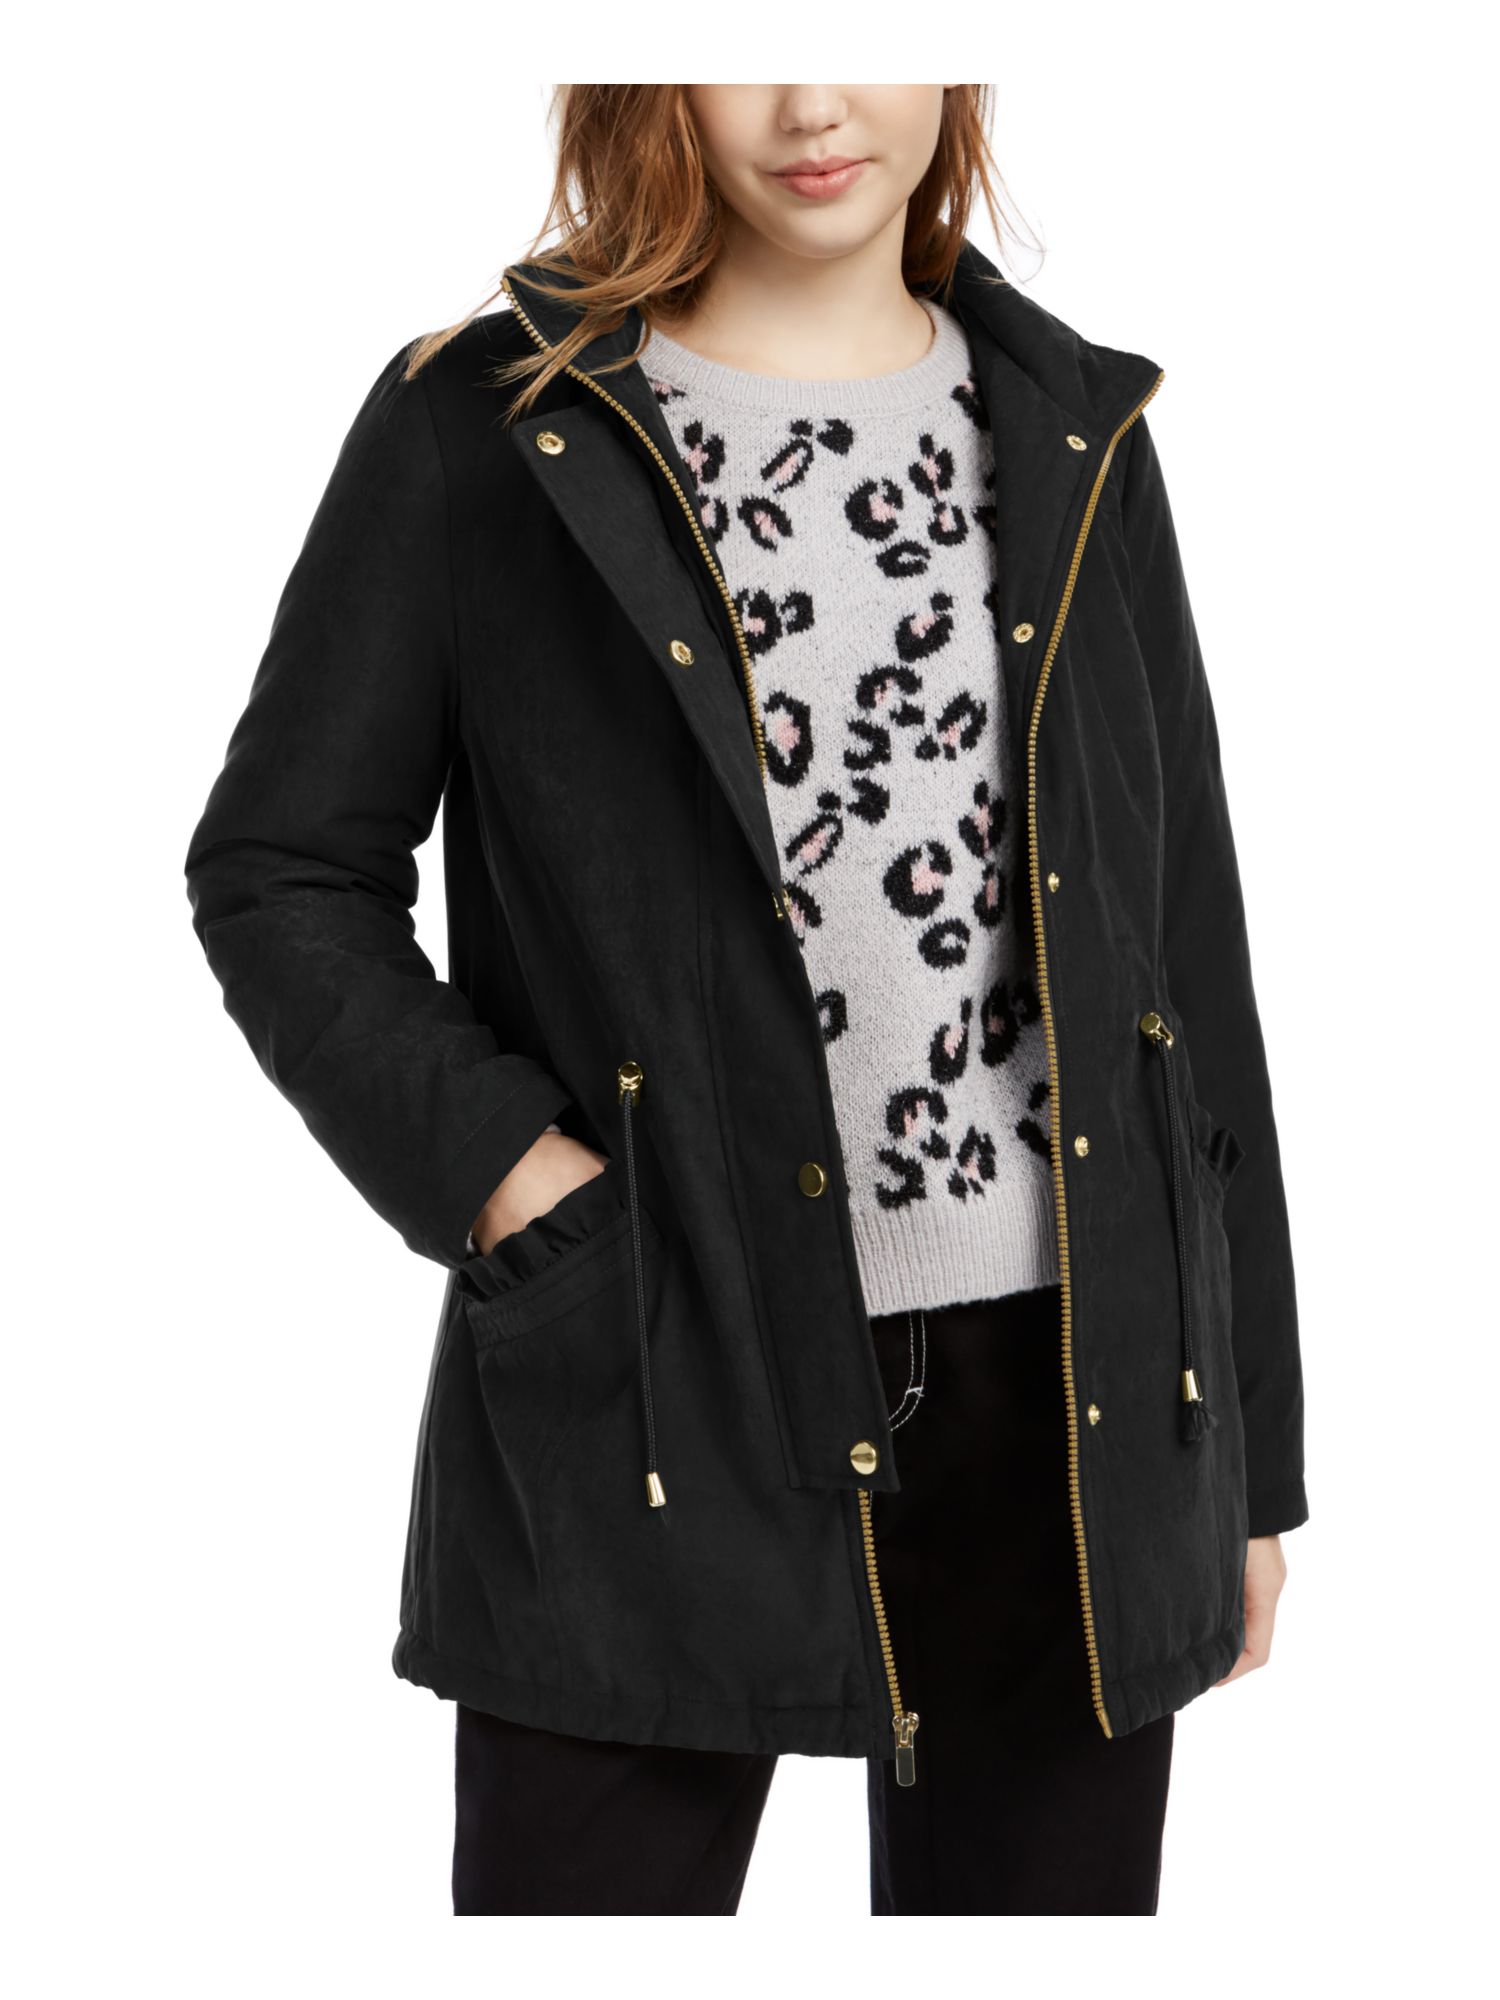 CELEBRITY PINK Womens Black Faux Fur Hood Parka Winter Jacket Coat Juniors L - image 3 of 4